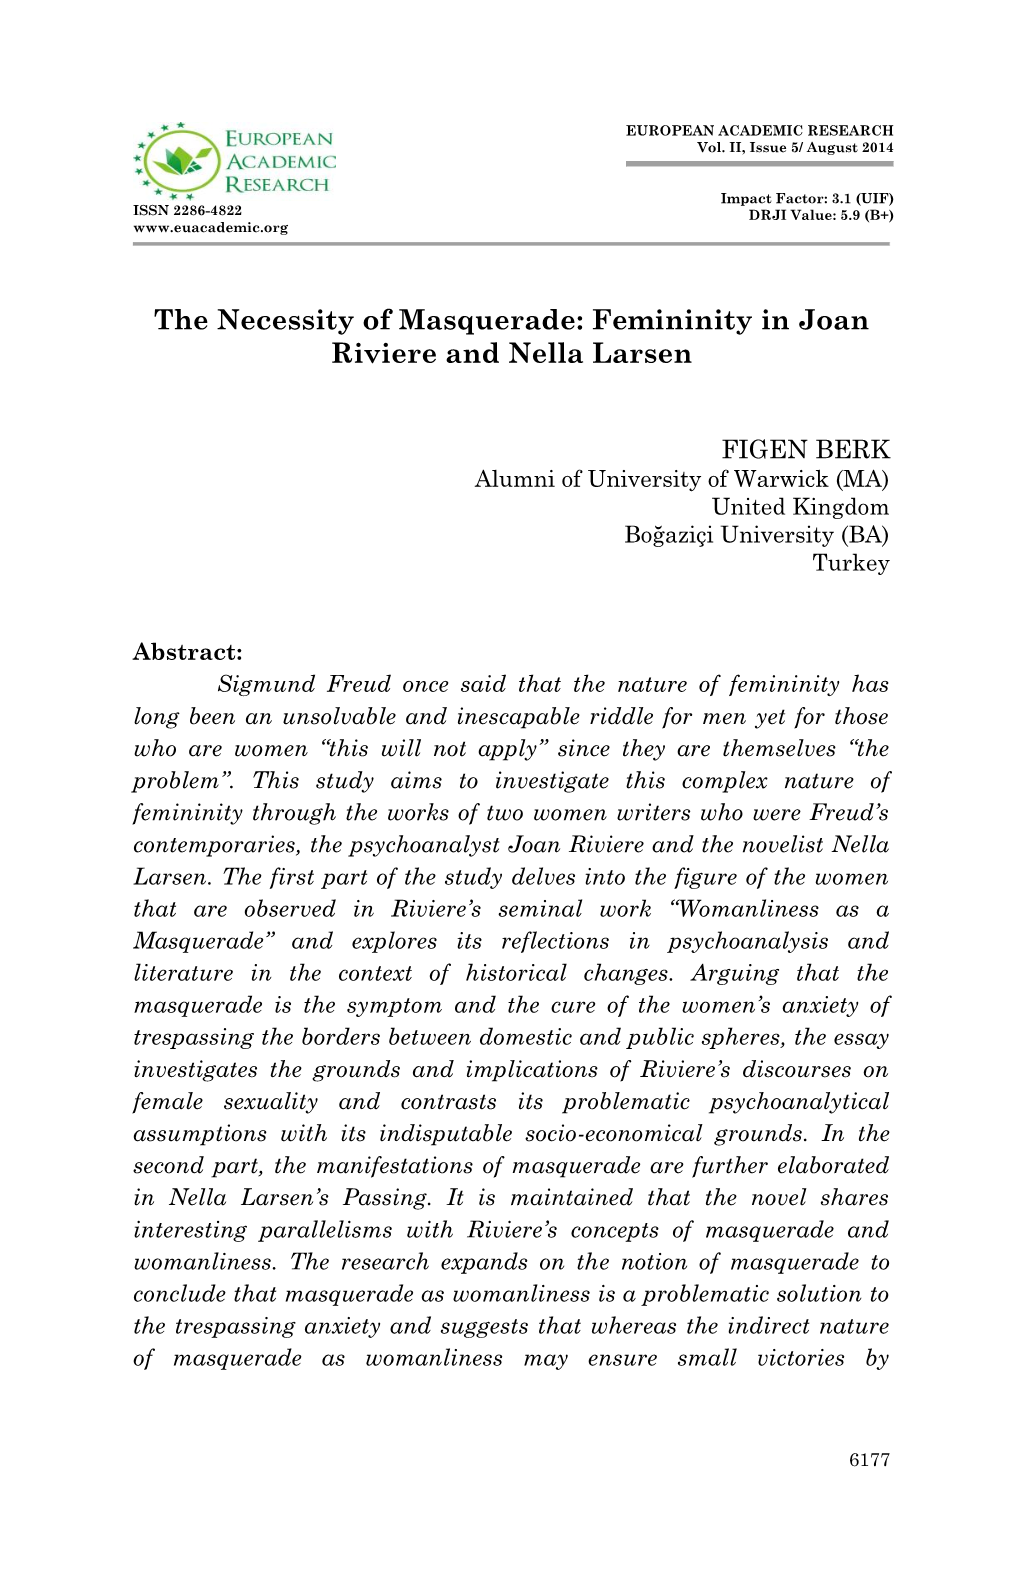 The Necessity of Masquerade: Femininity in Joan Riviere and Nella Larsen